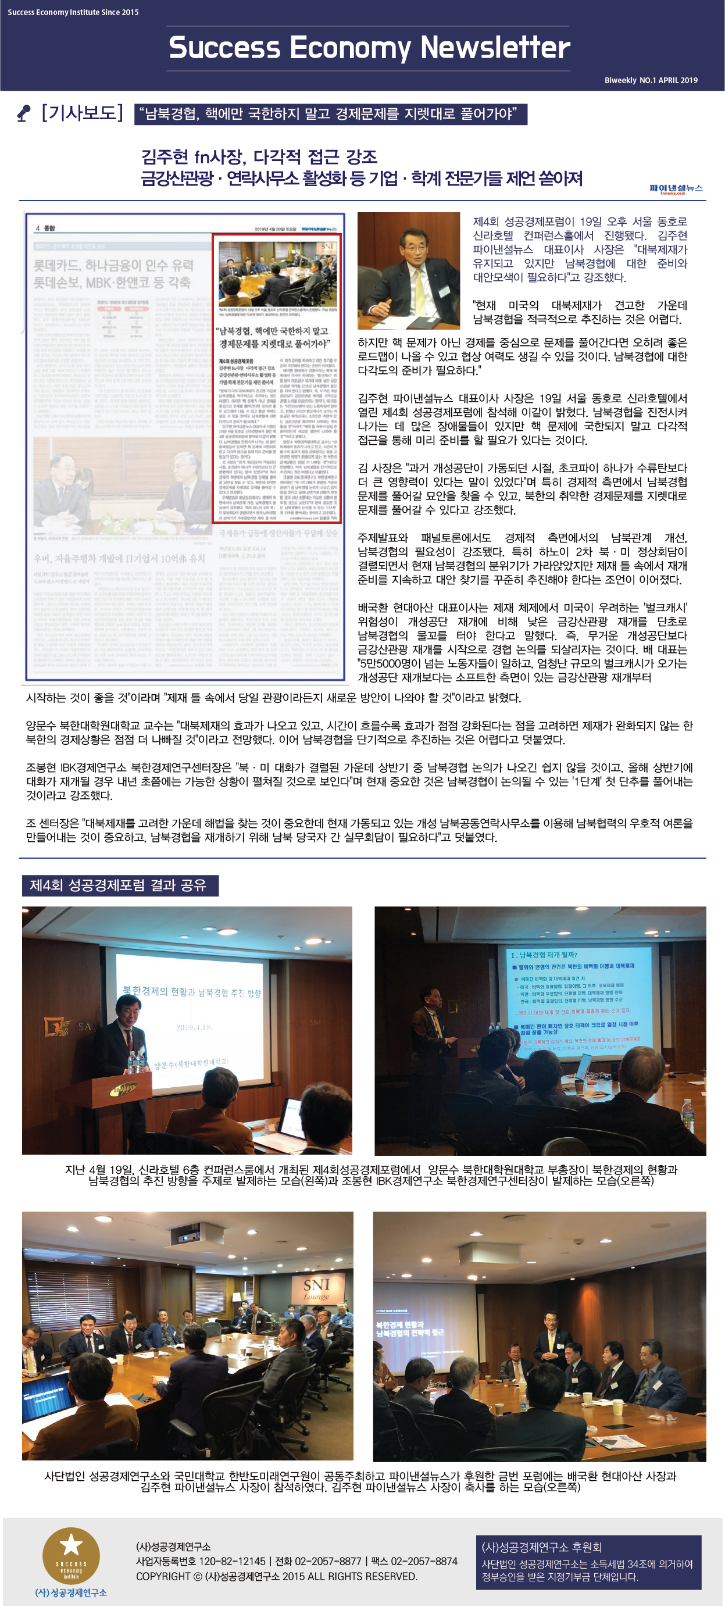 SEI Newsletter_2019.04 [제4회 성공경제포럼 결과공유].png